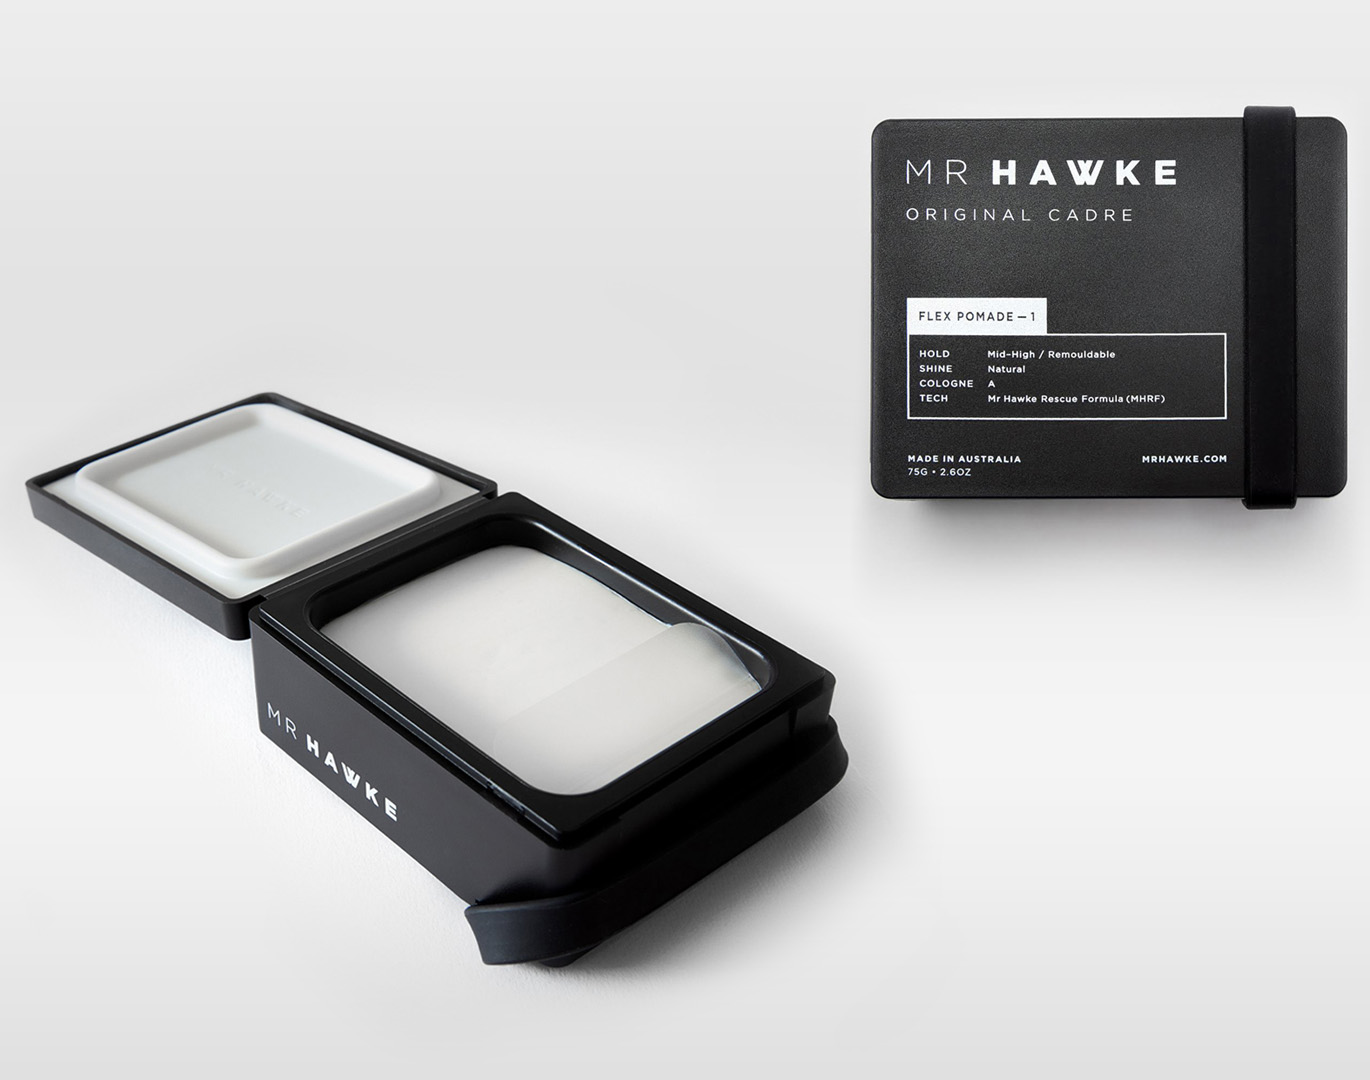 Mr Hawke - product packaging design